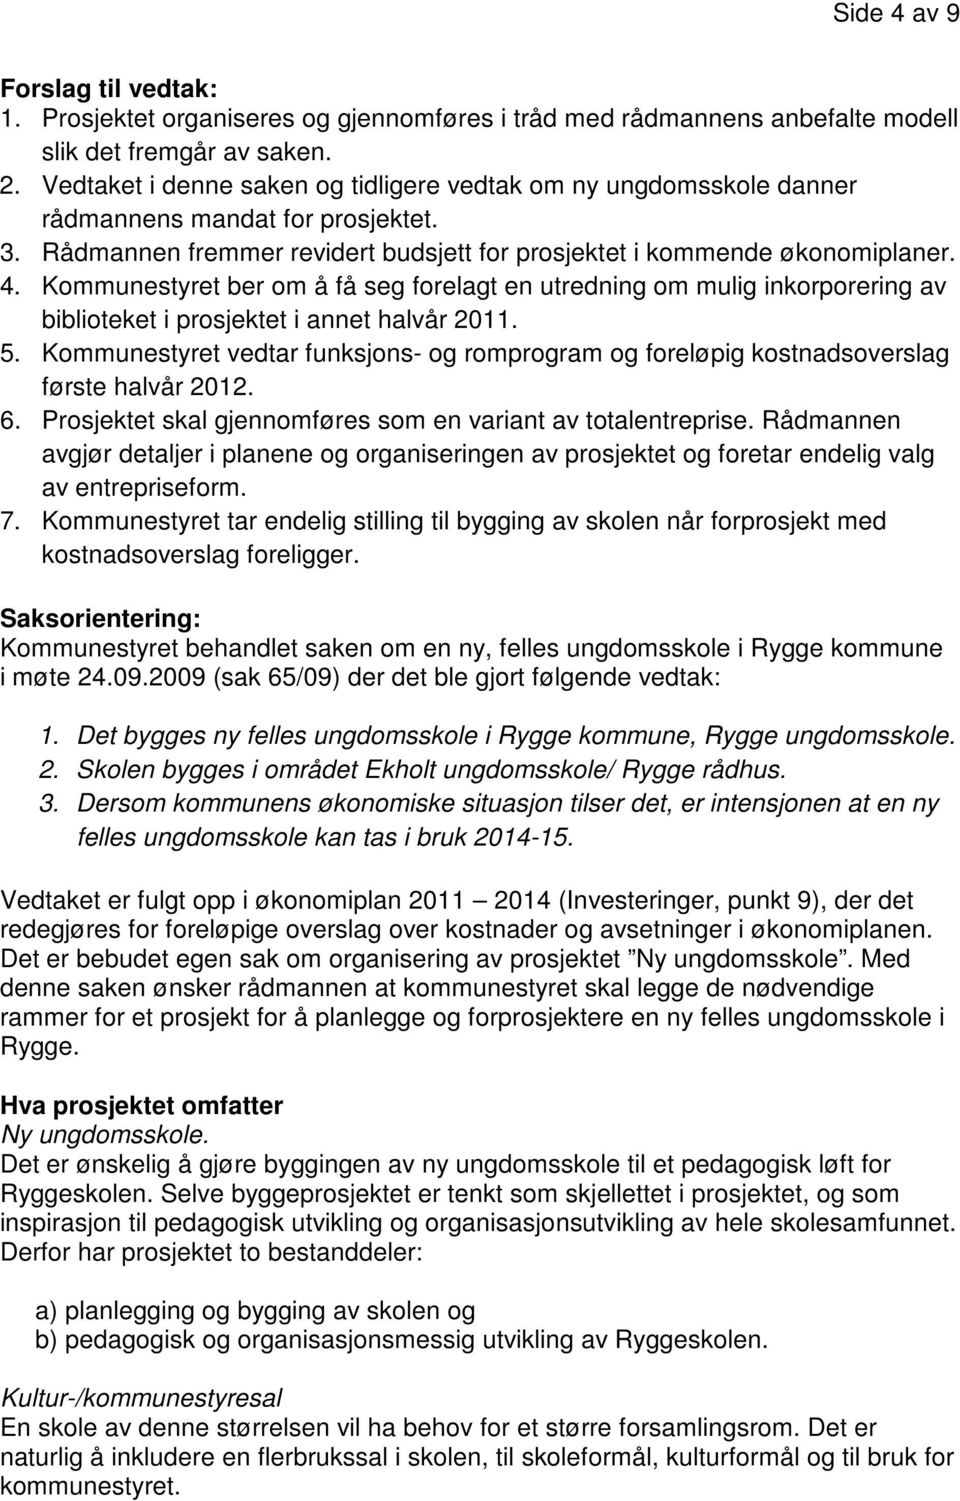 Saksorientering: Kommunestyret behandlet saken om en ny, felles ungdomsskole i Rygge kommune i møte 24.09.2009 (sak 65/09) der det ble gjort følgende vedtak: 1.